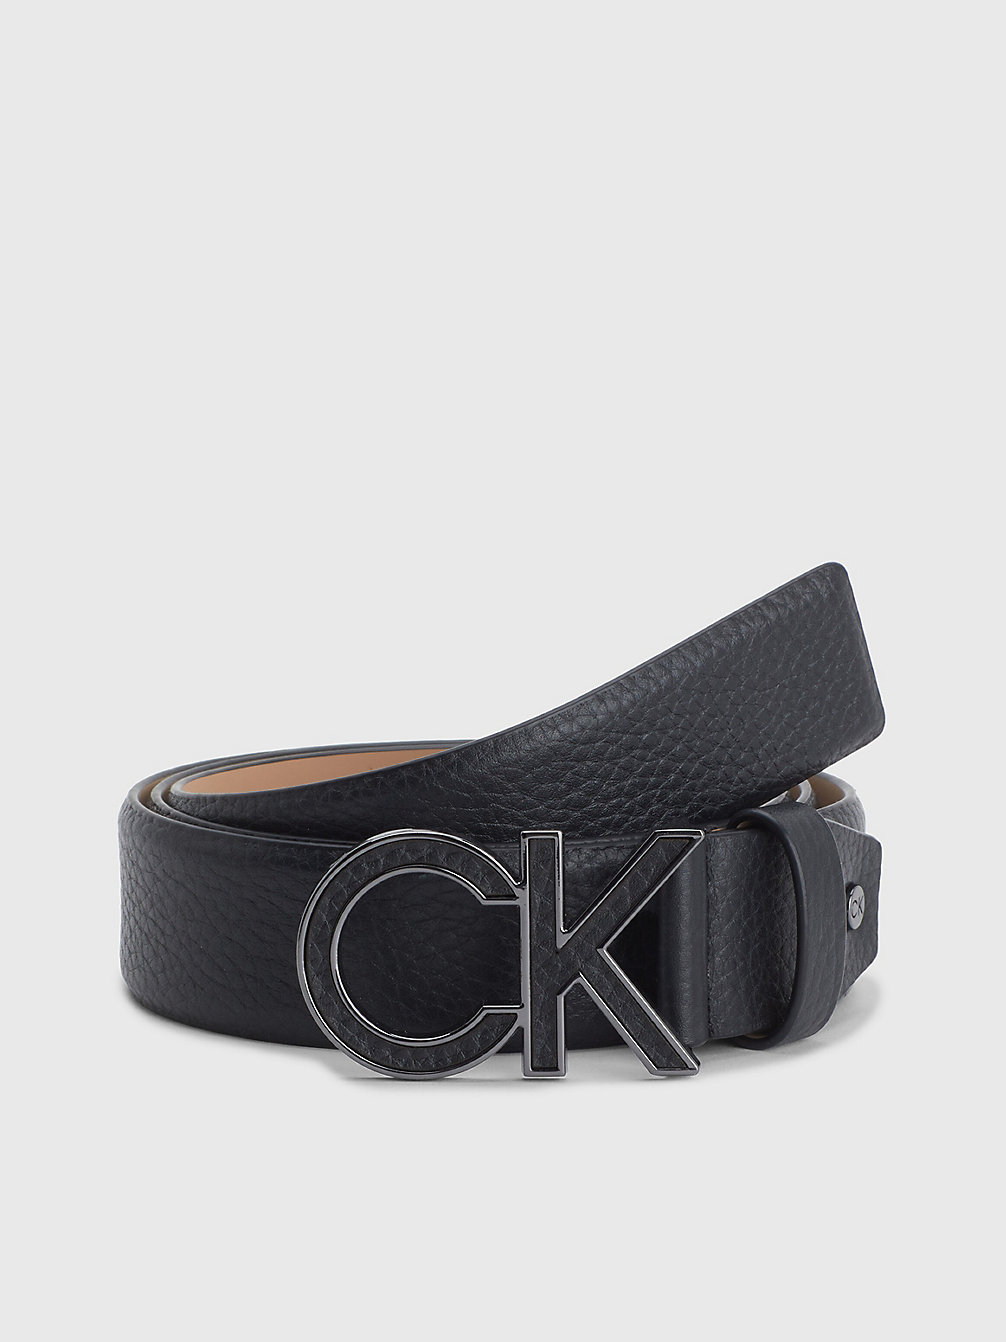 CK BLACK > Logo-Ledergürtel > undefined men - Calvin Klein